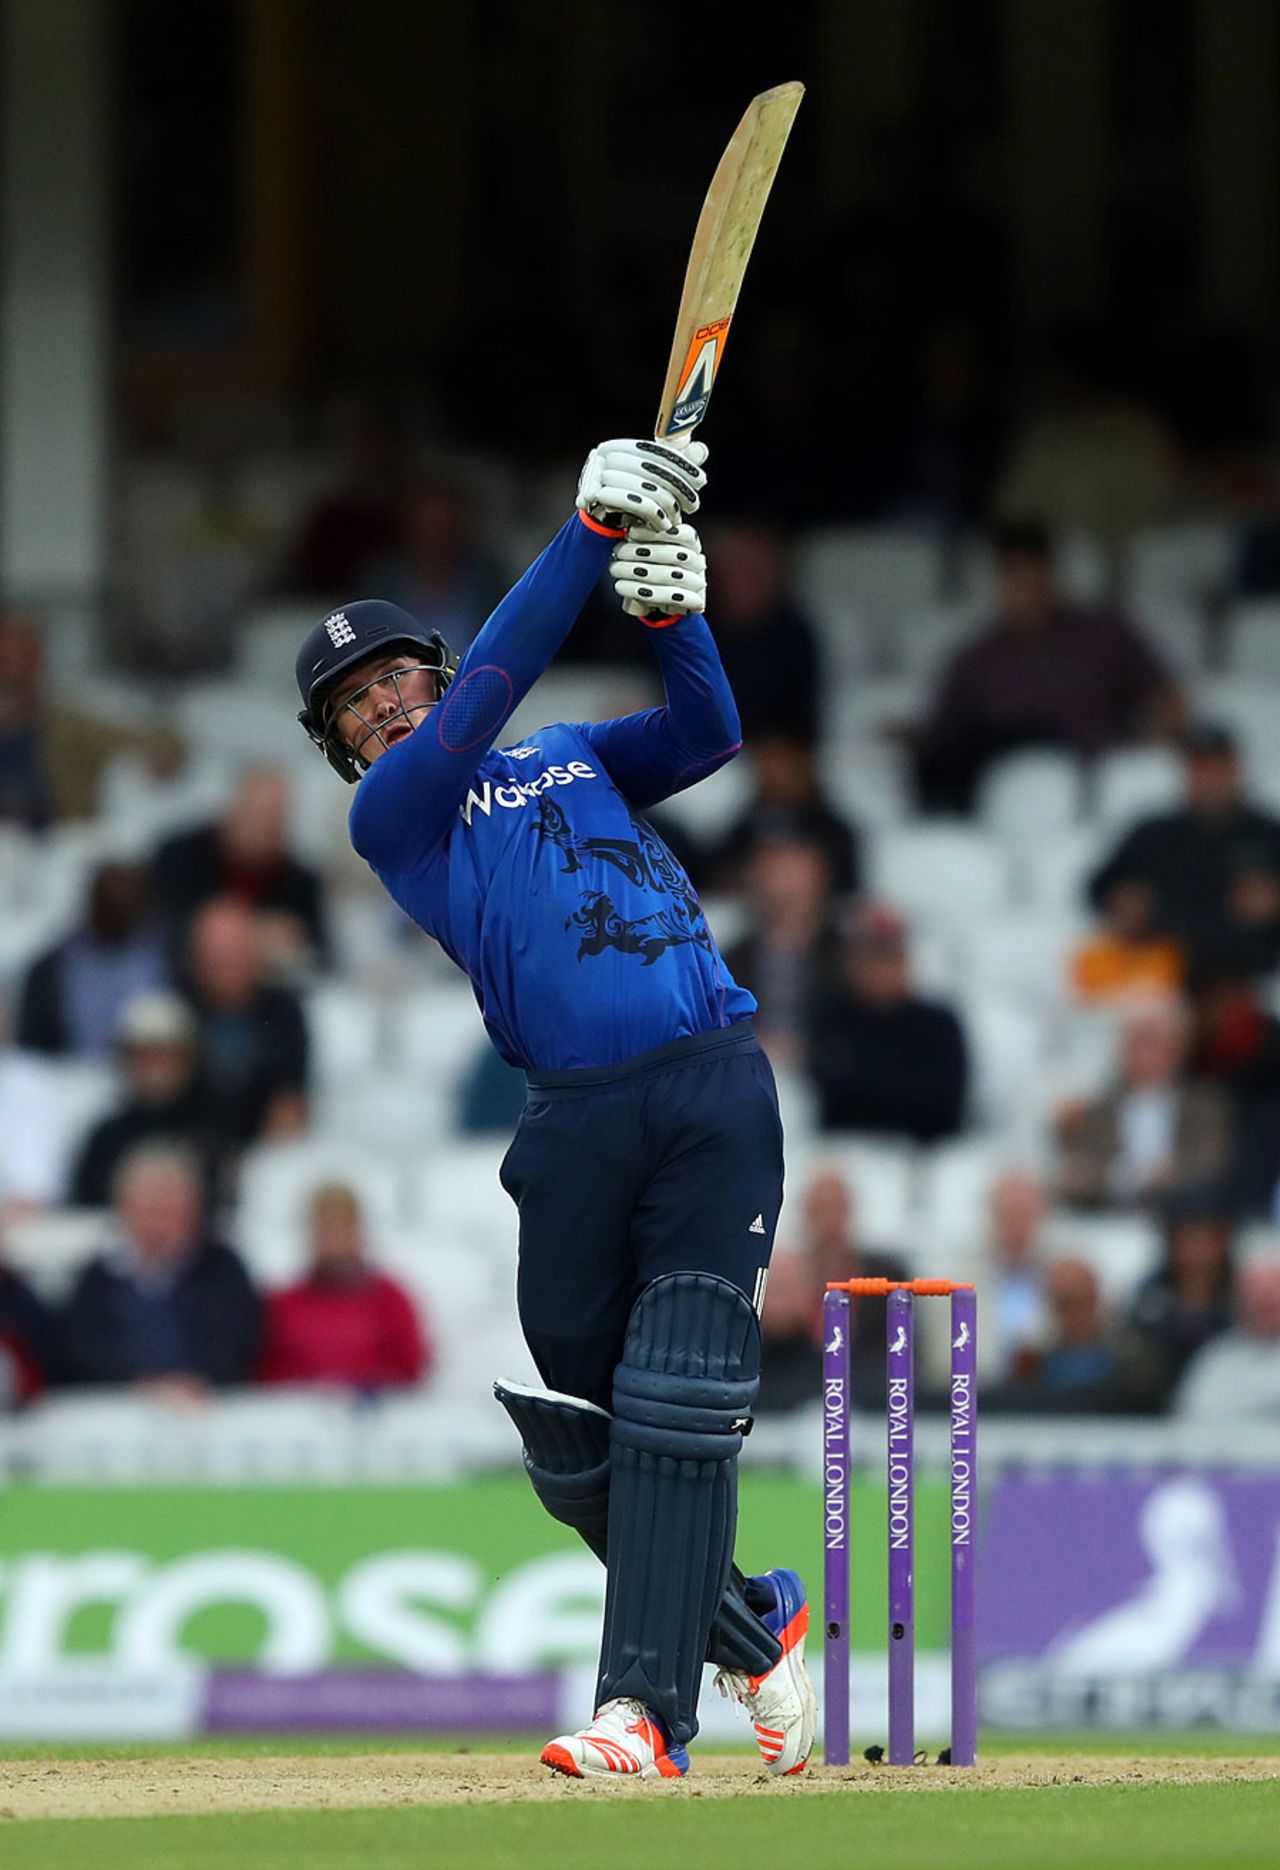 Jason Roy peppered the straight boundaries, England v Sri Lanka, 4th ODI, The Oval, June 29, 2016